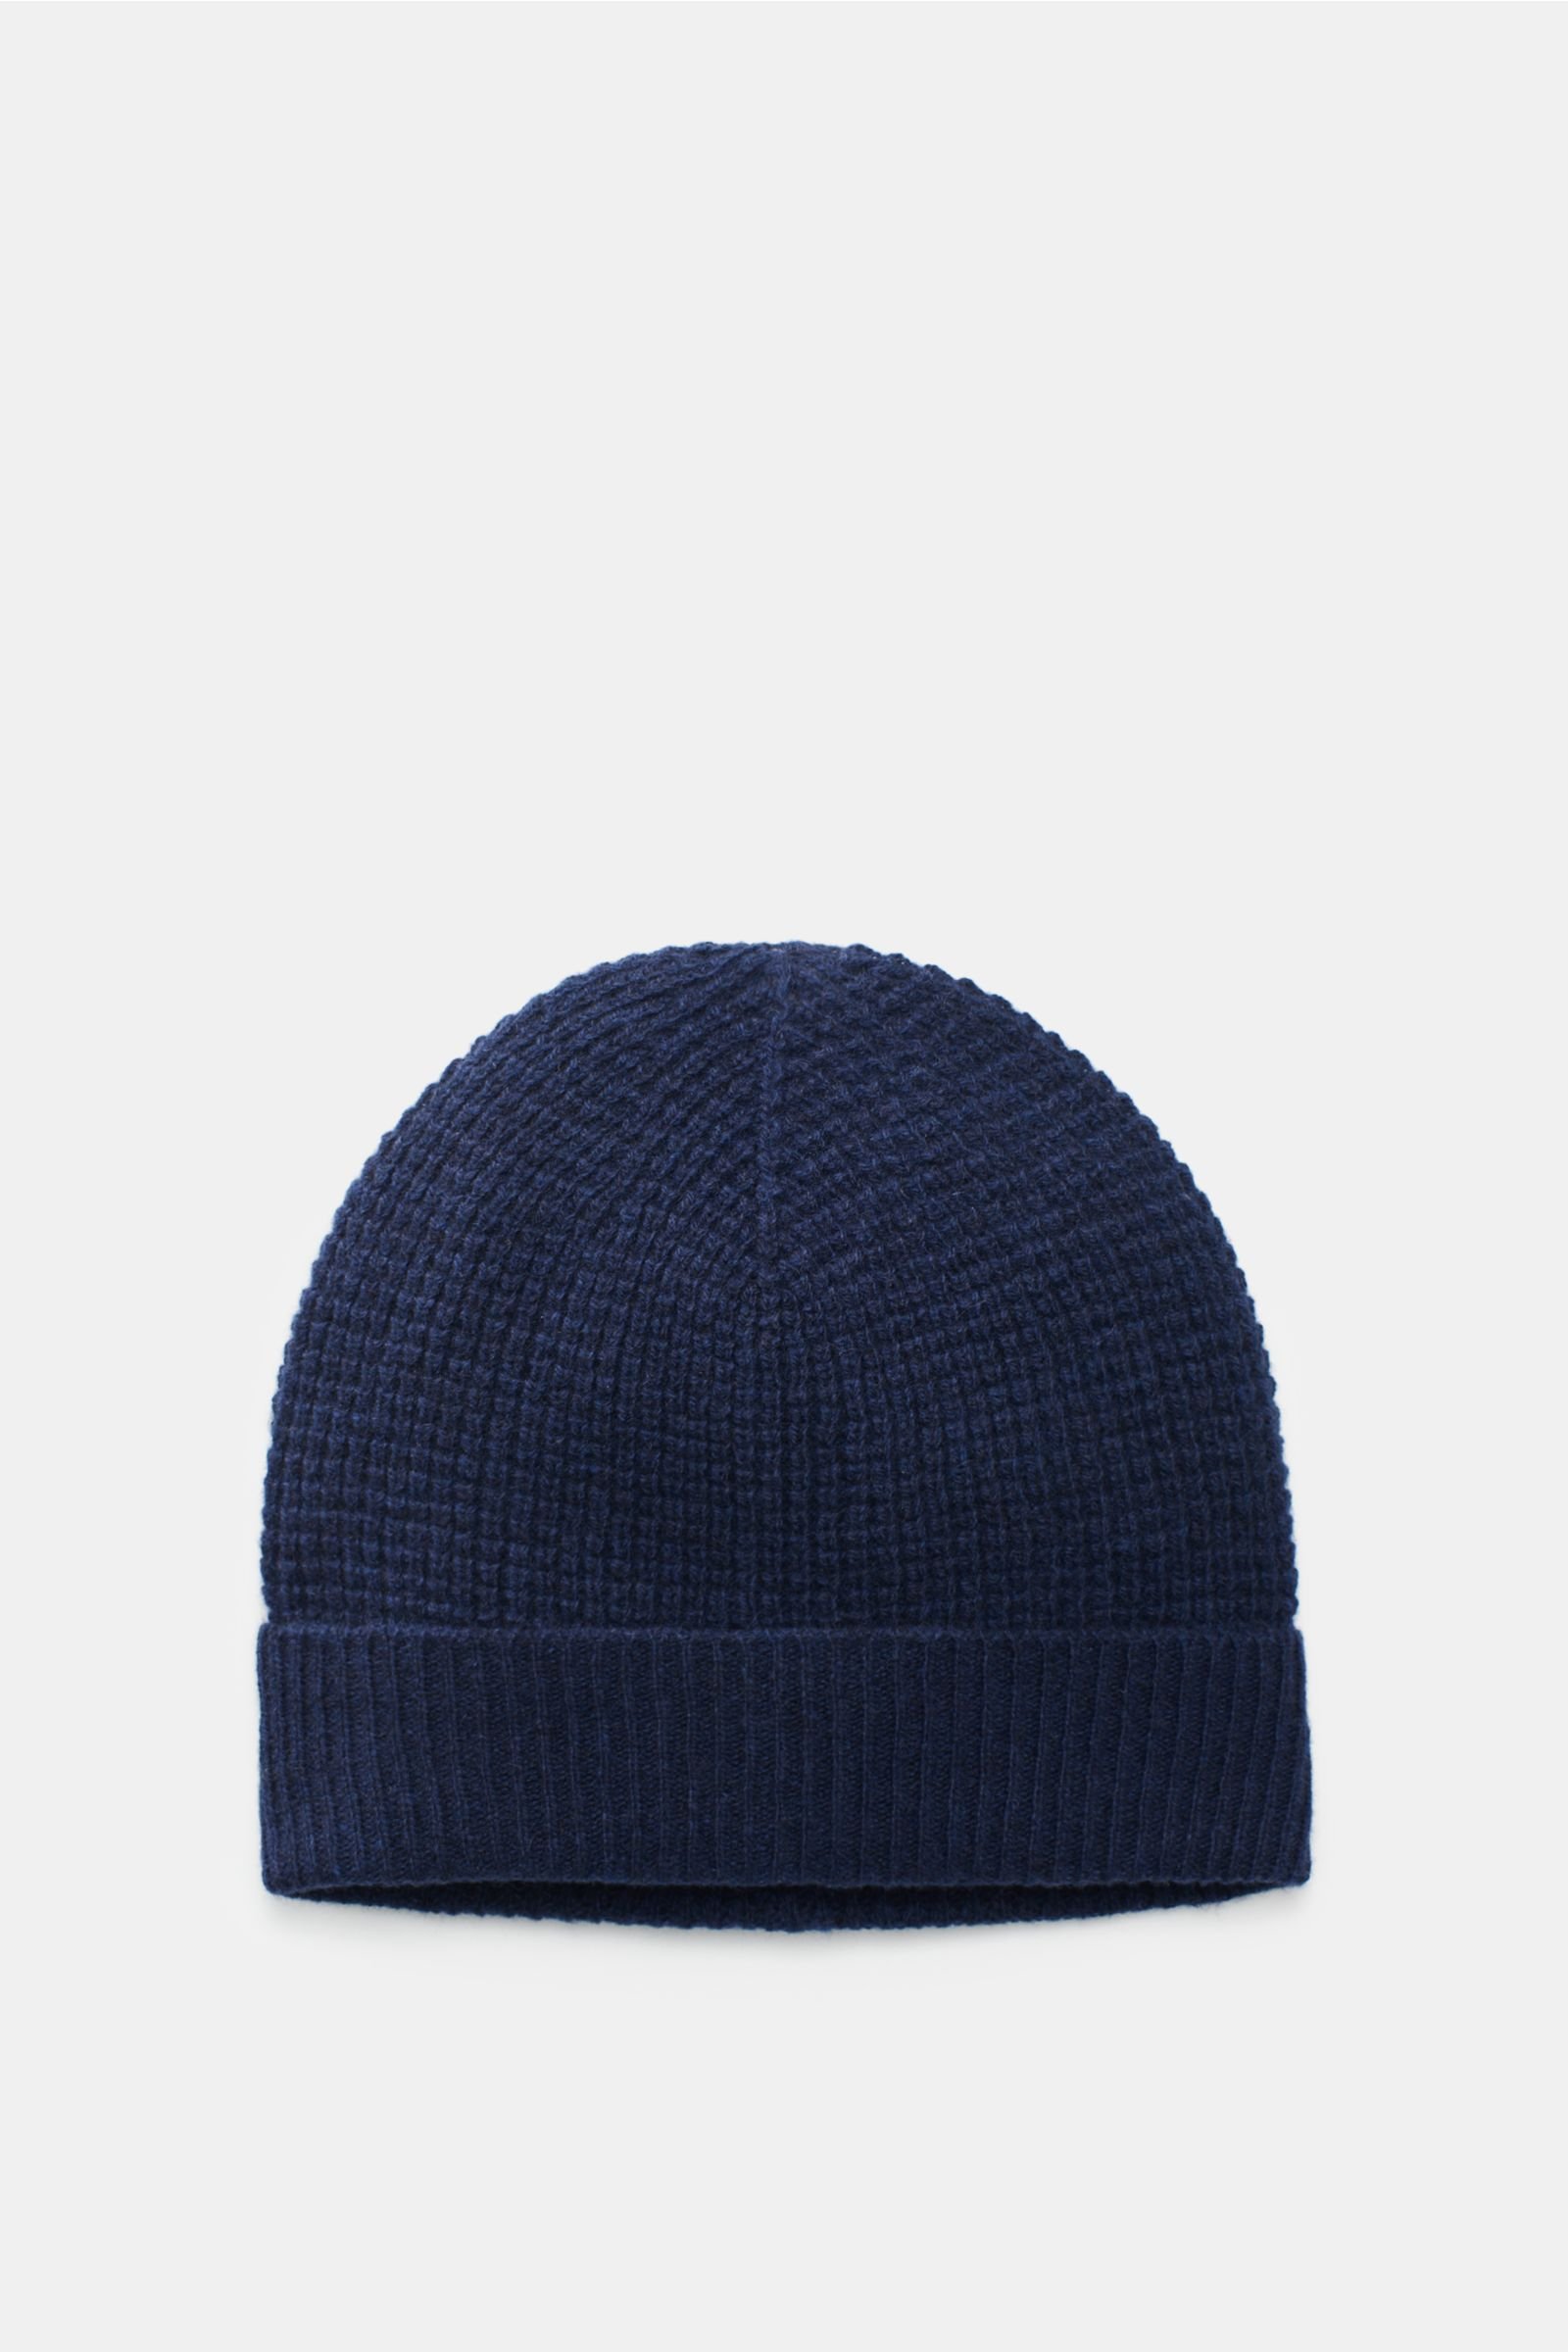 Cashmere Mütze dunkelblau